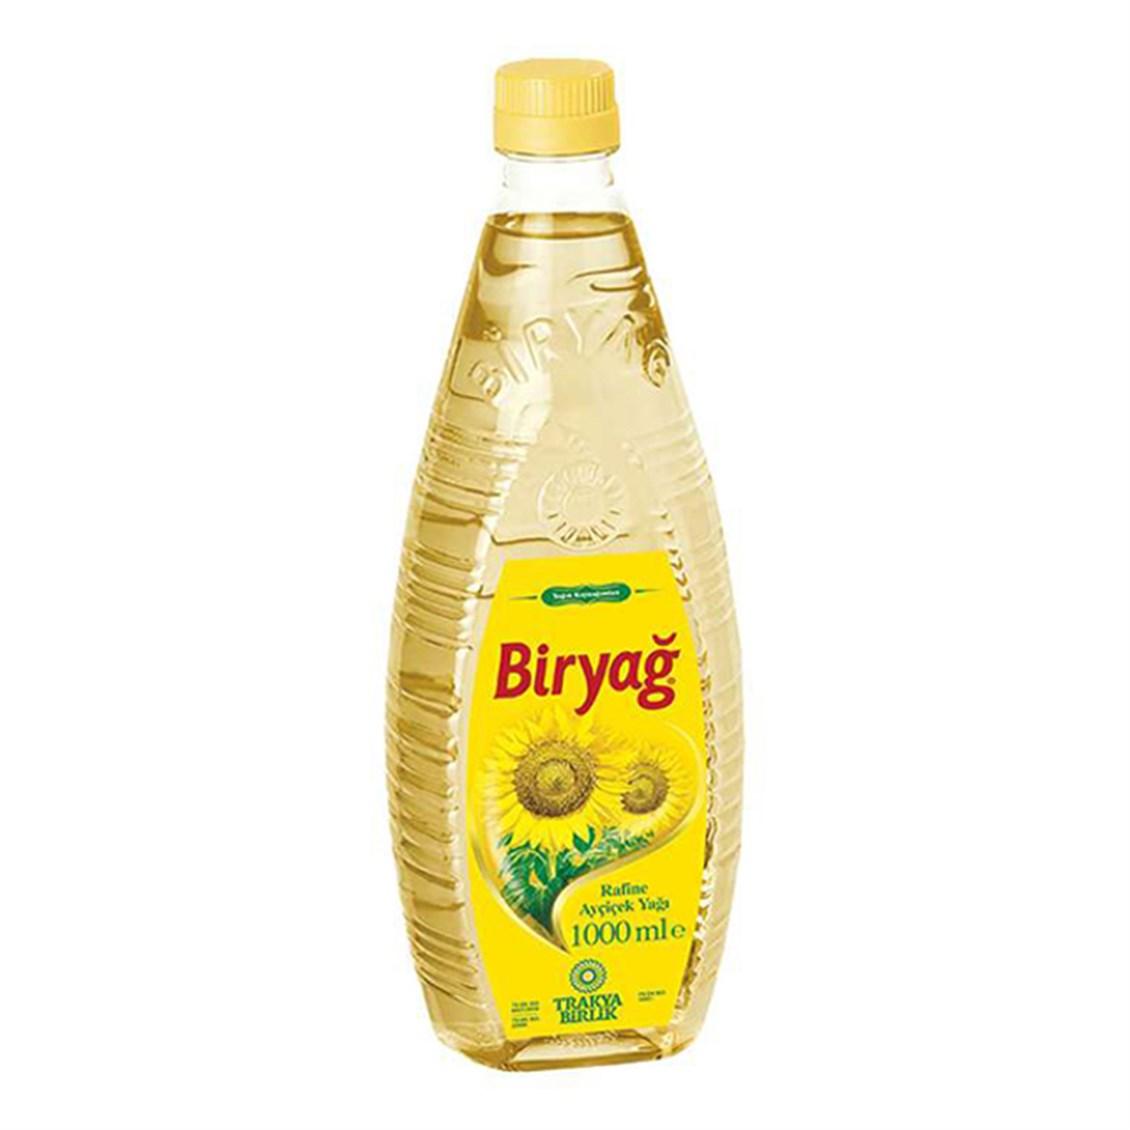 biryag_1_litre